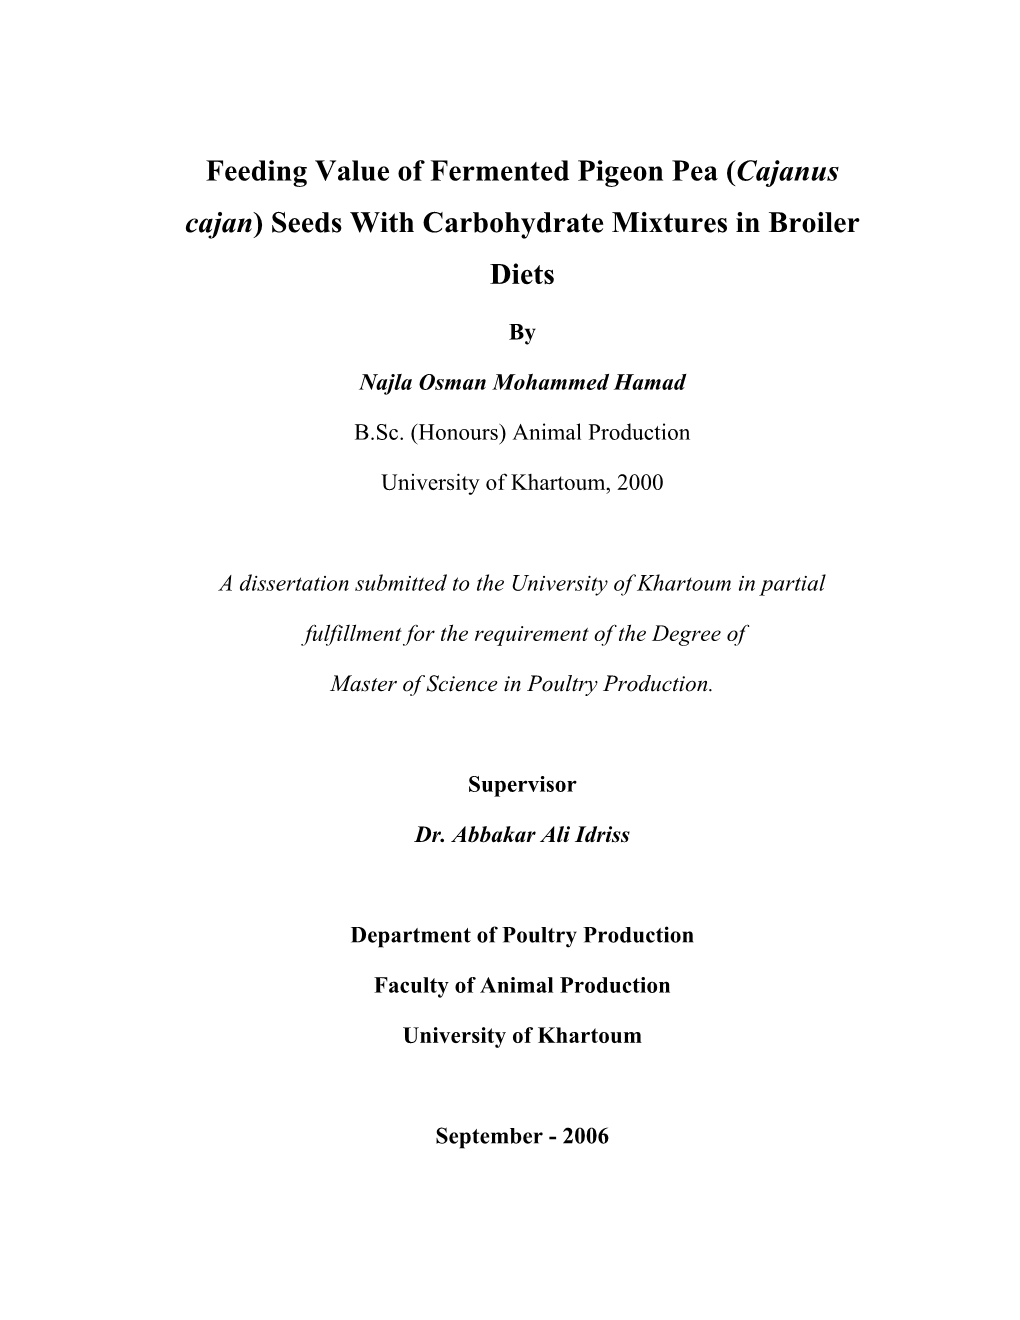 Feeding Value of Fermented Pigeon Pea (Cajanus Cajan) Seeds with Carbohydrate Mixtures in Broiler Diets